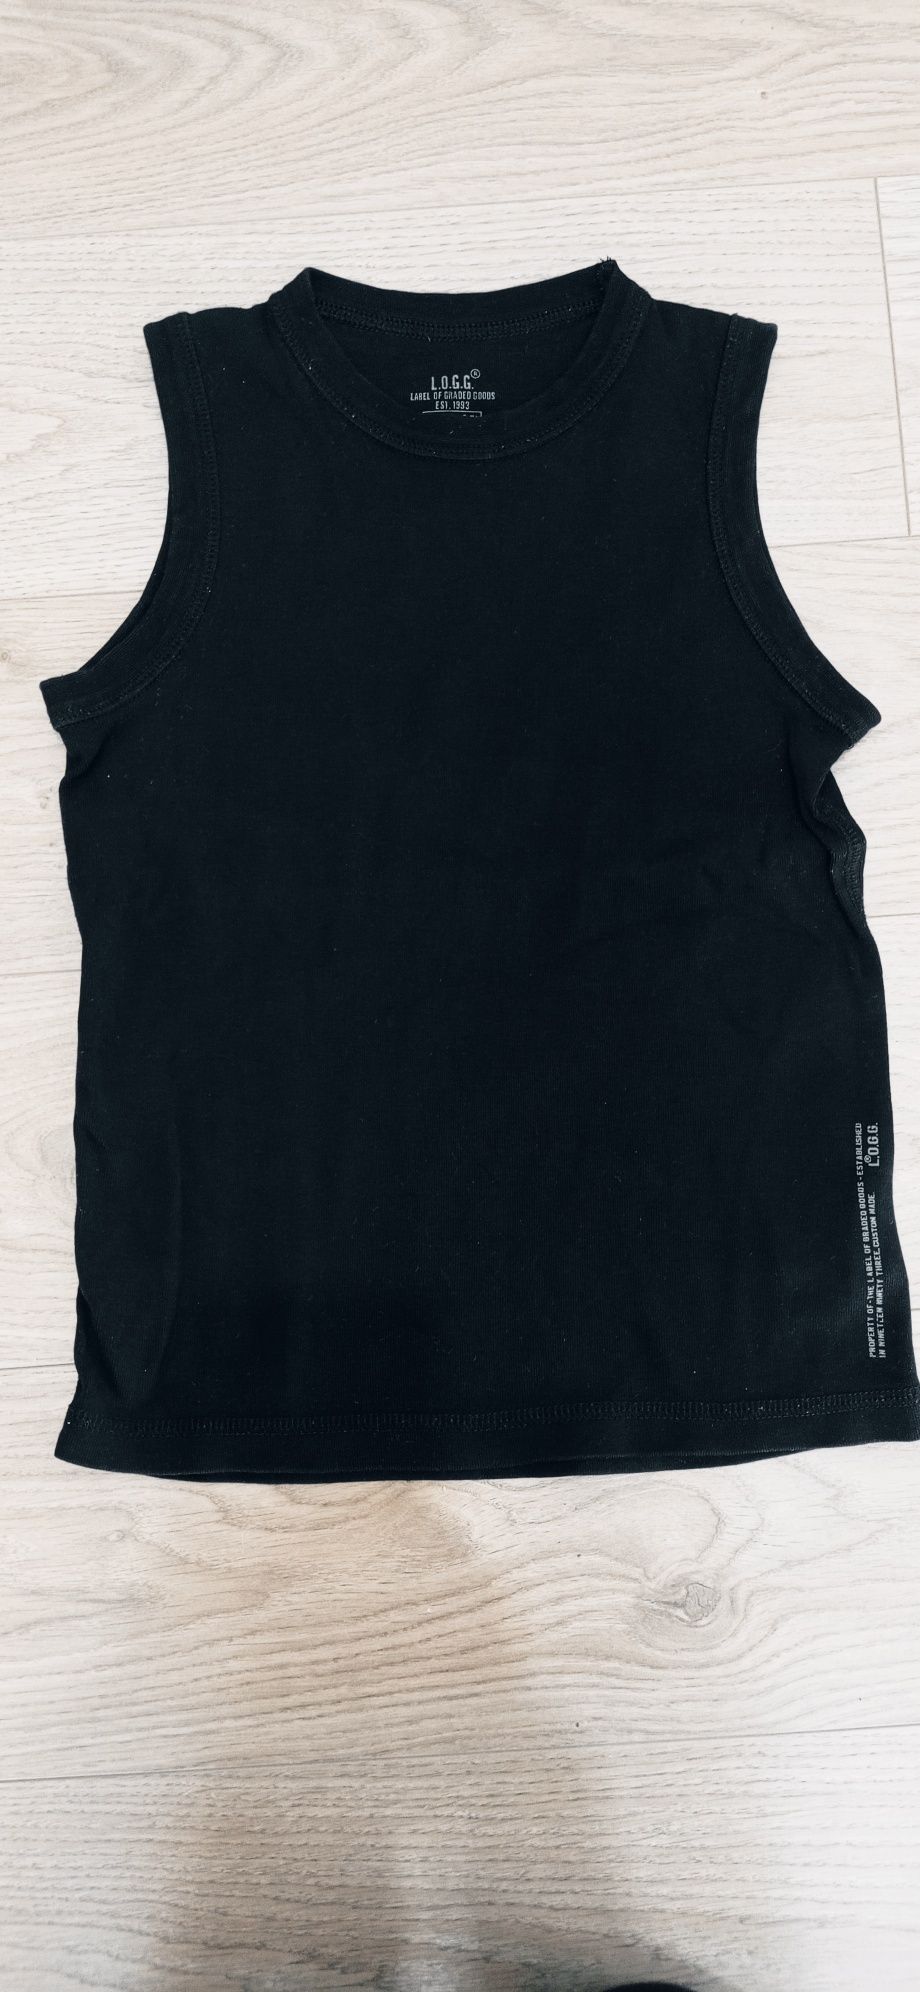 Podkoszulka, t-shirt H&M rozmiar 116